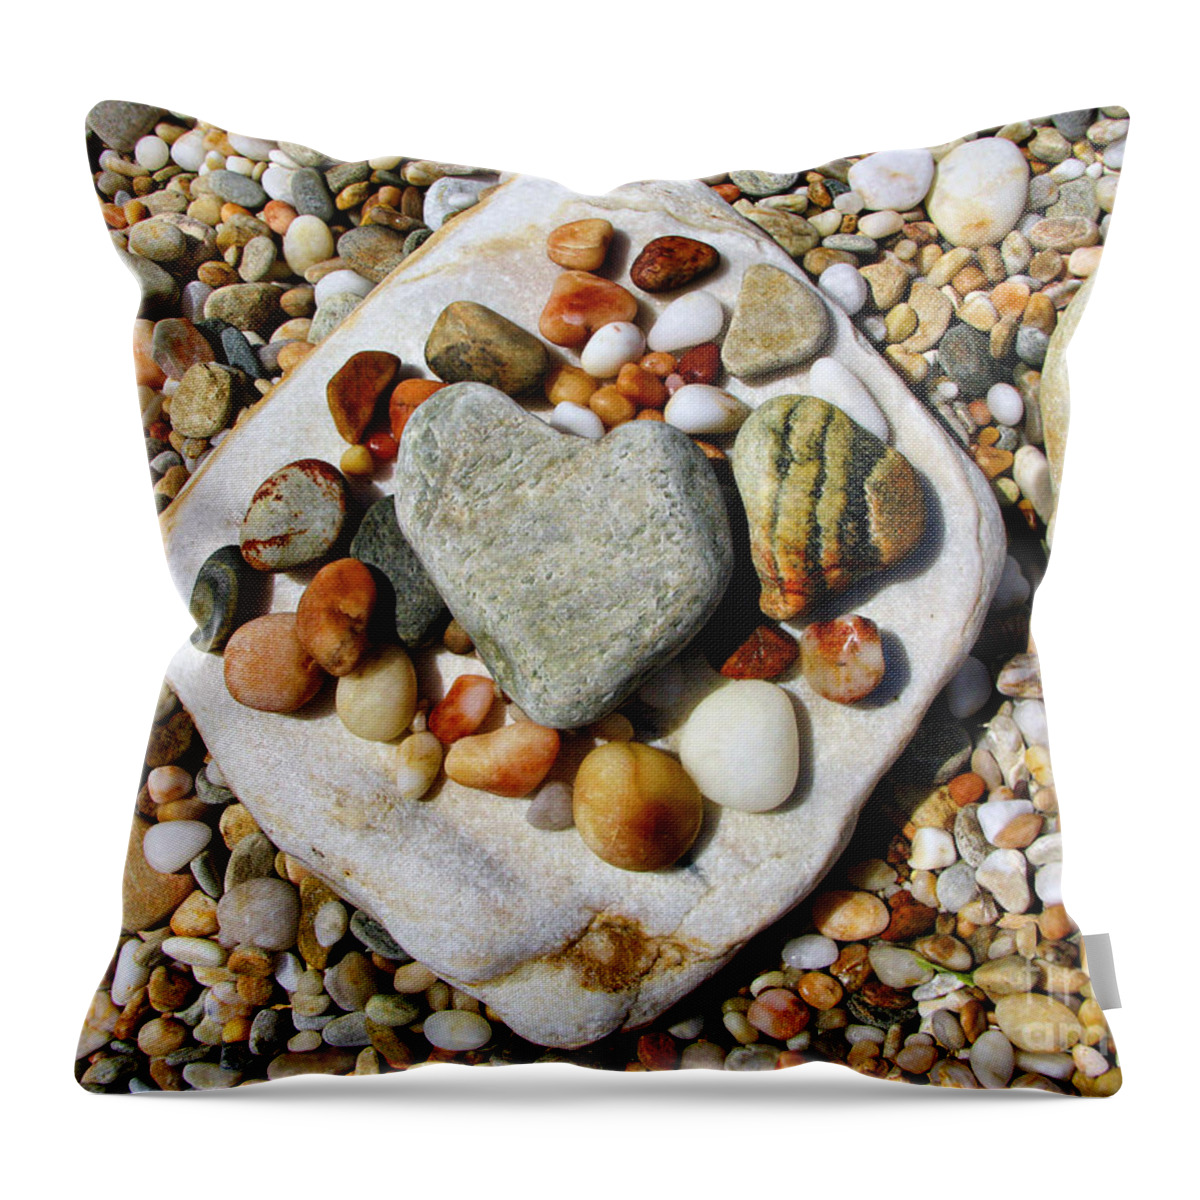 Beach Treasures Throw Pillow featuring the photograph Beach treasures by Daliana Pacuraru